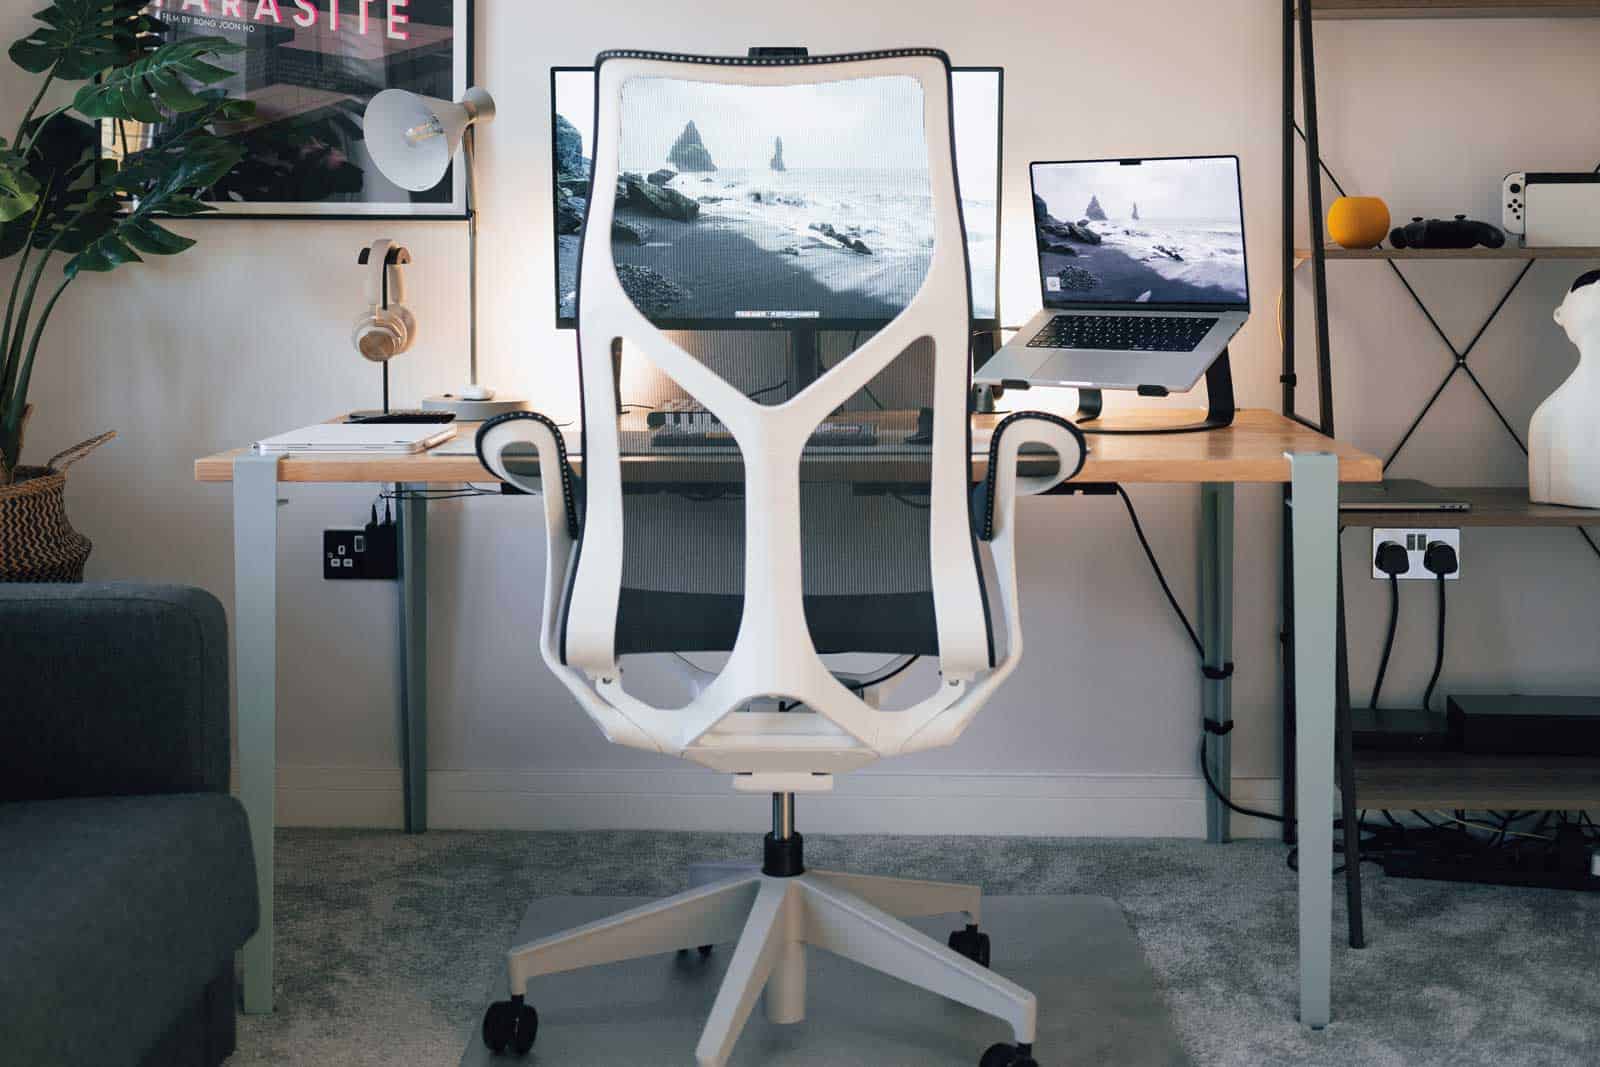 An ergonomic desk and chair